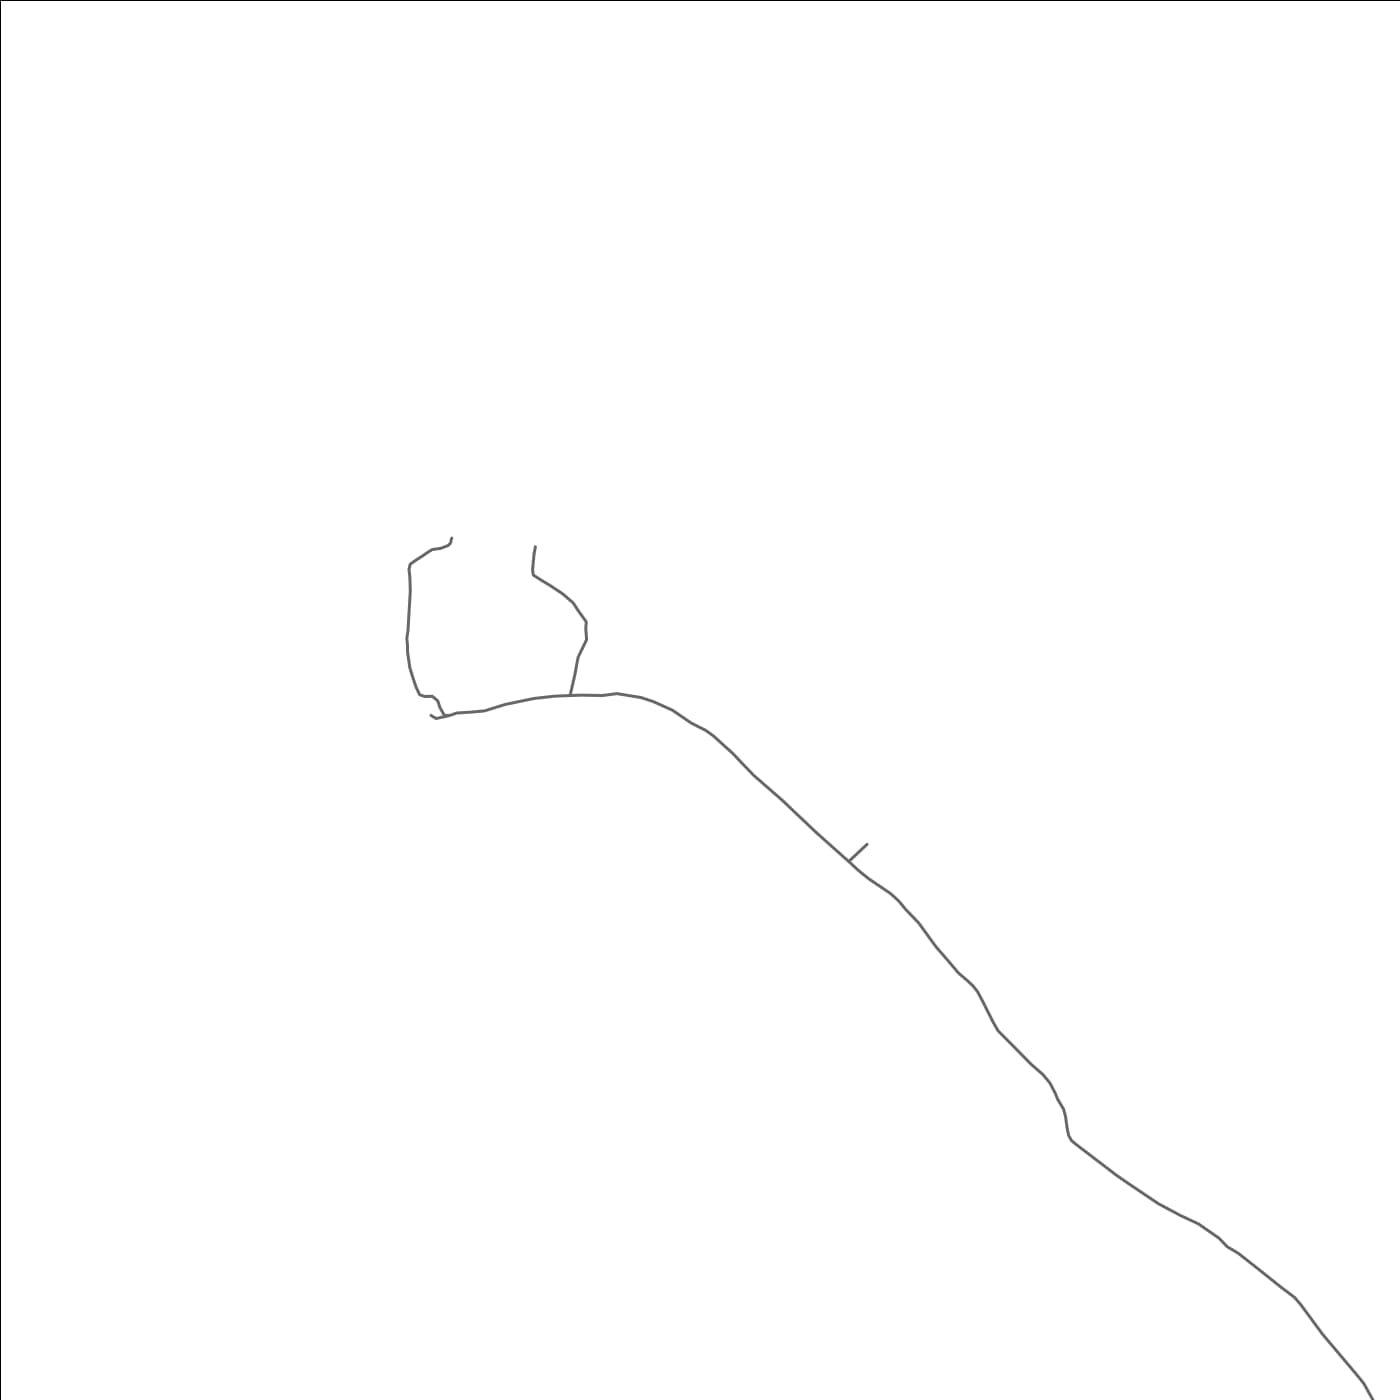 ROAD MAP OF TAKARANO, KIRIBATI BY MAPBAKES